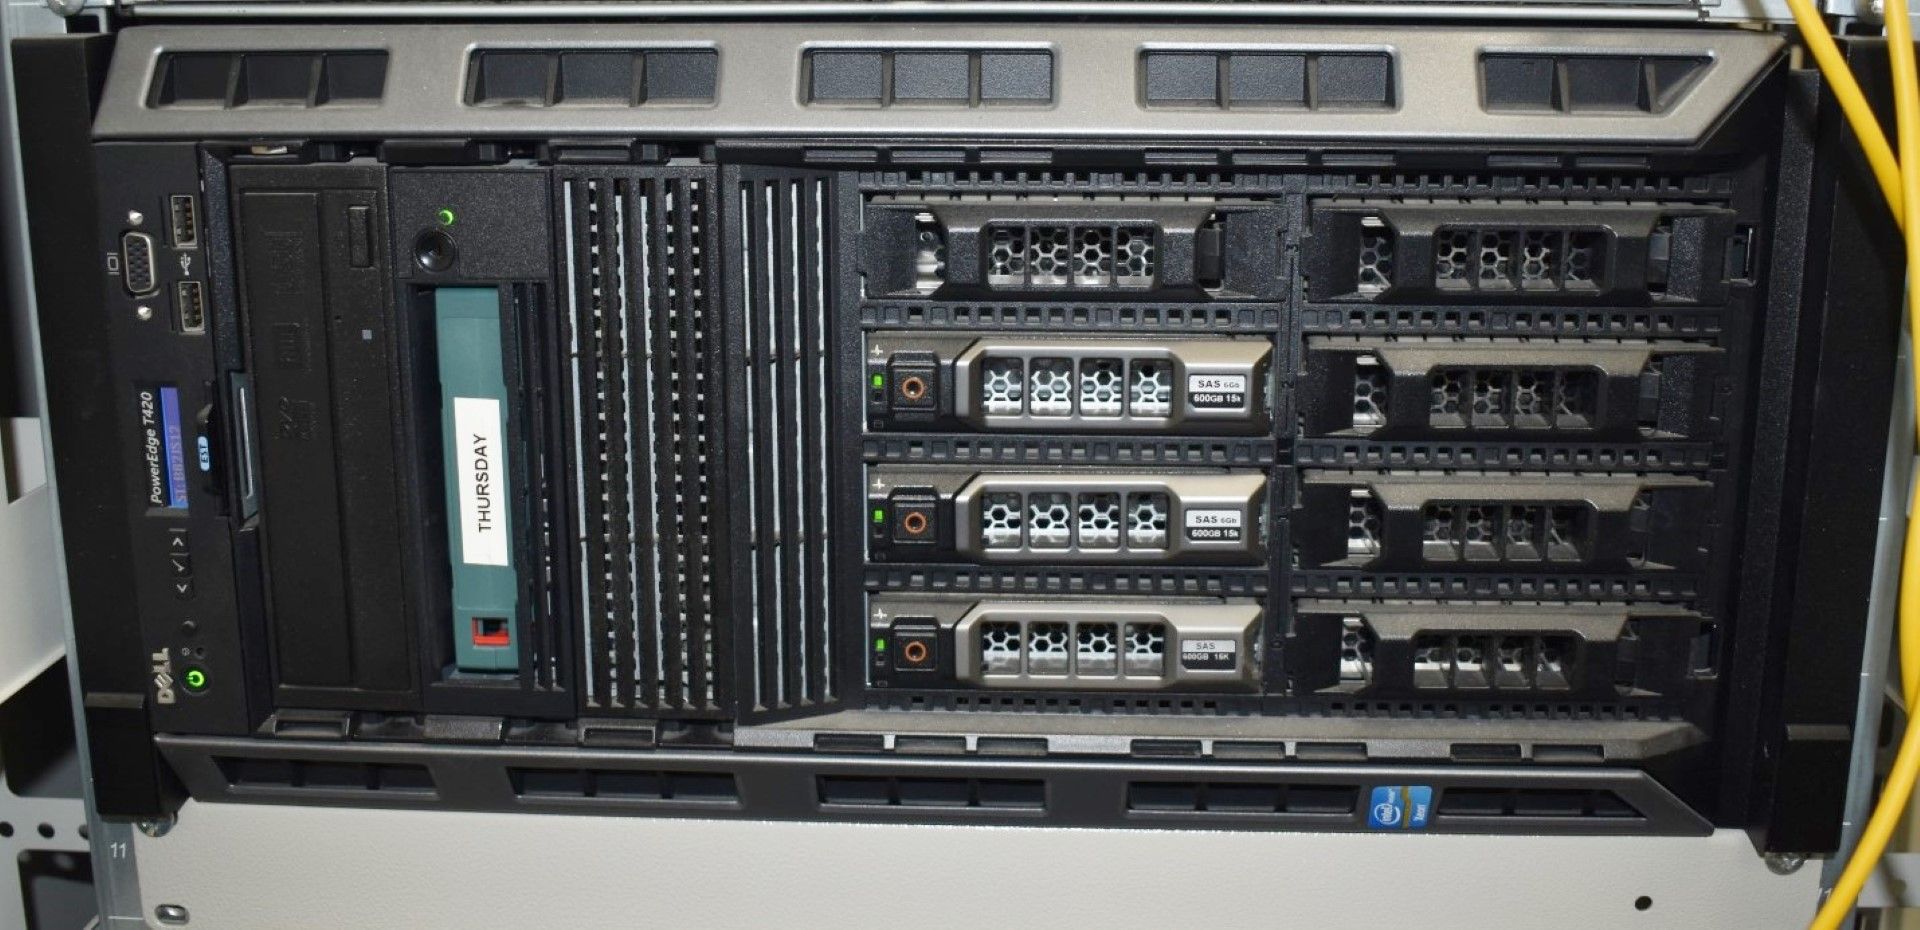 1 x Server DATA Rack Cabinet With Dell Power Edge T420 Server, Cisco 2921, Alcatel OS6250-8M, Adva - Image 10 of 22